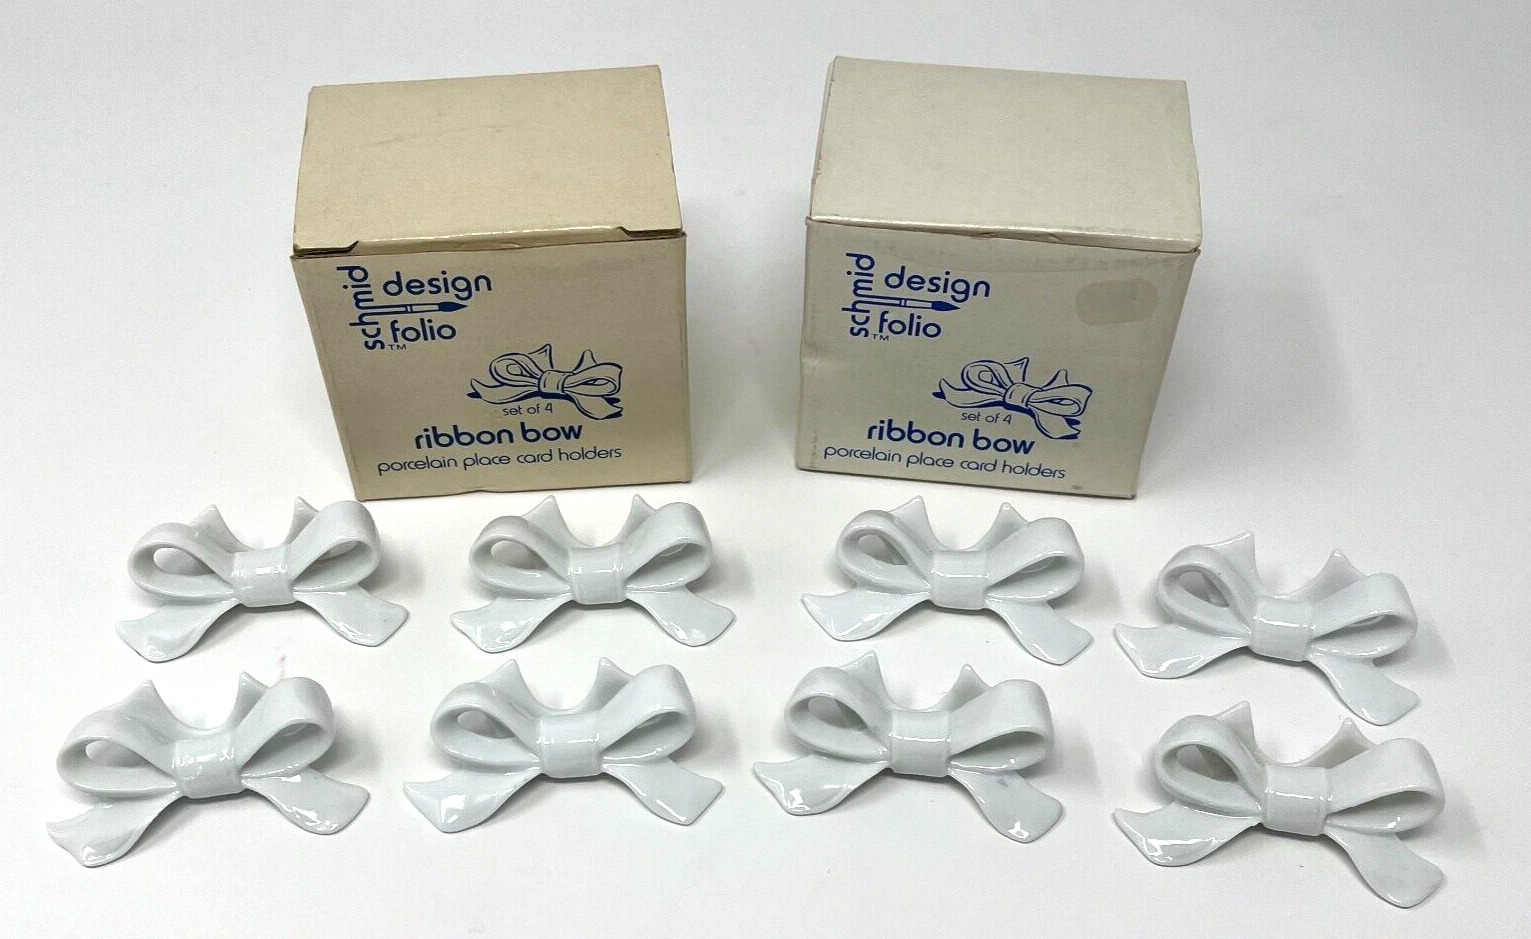 8 Vintage Ribbon Bow Porcelain Place Card Holders 1976 Betty St. John Boxes